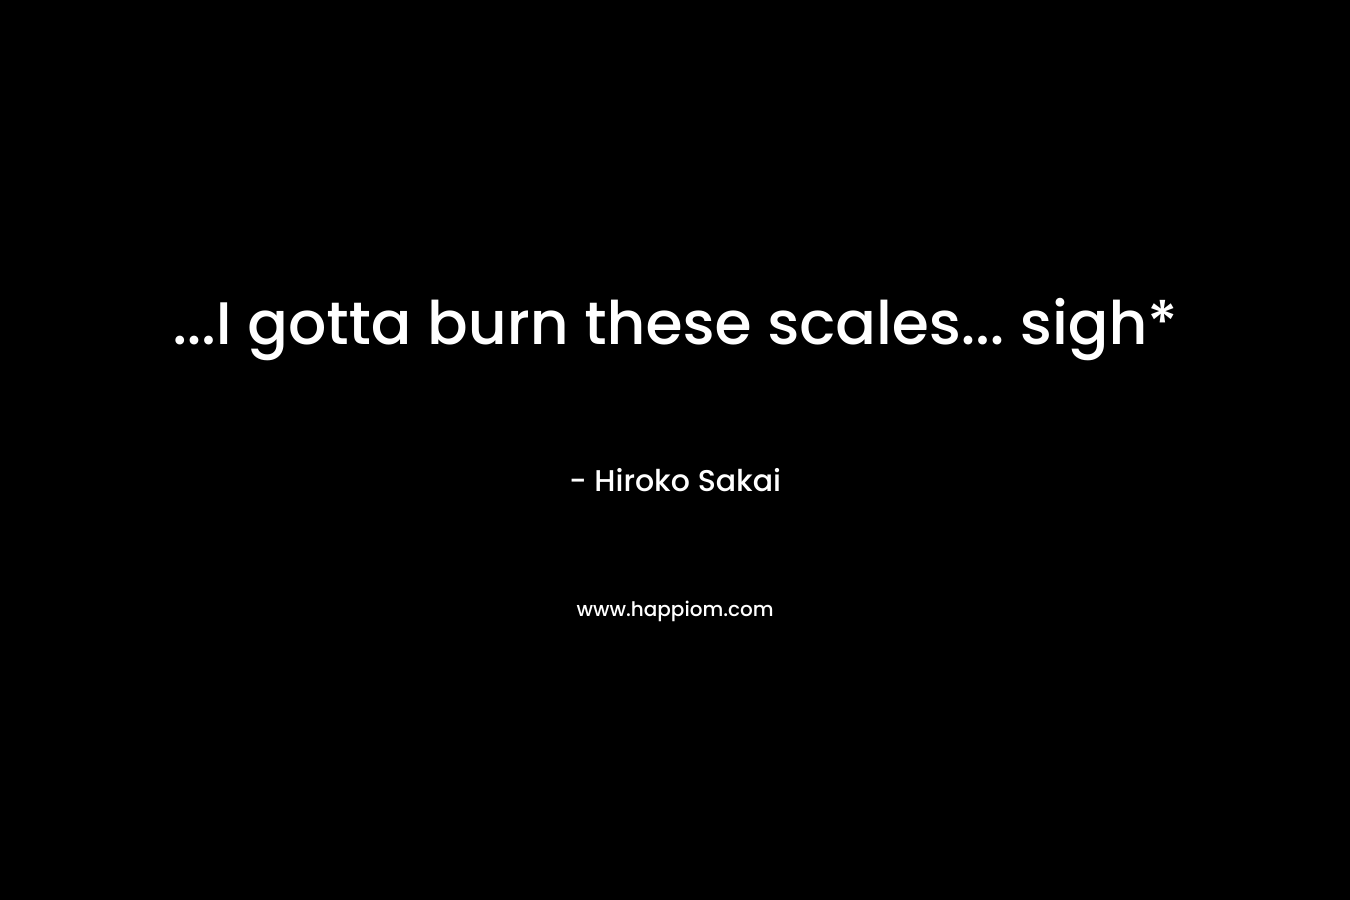 ...I gotta burn these scales... sigh*